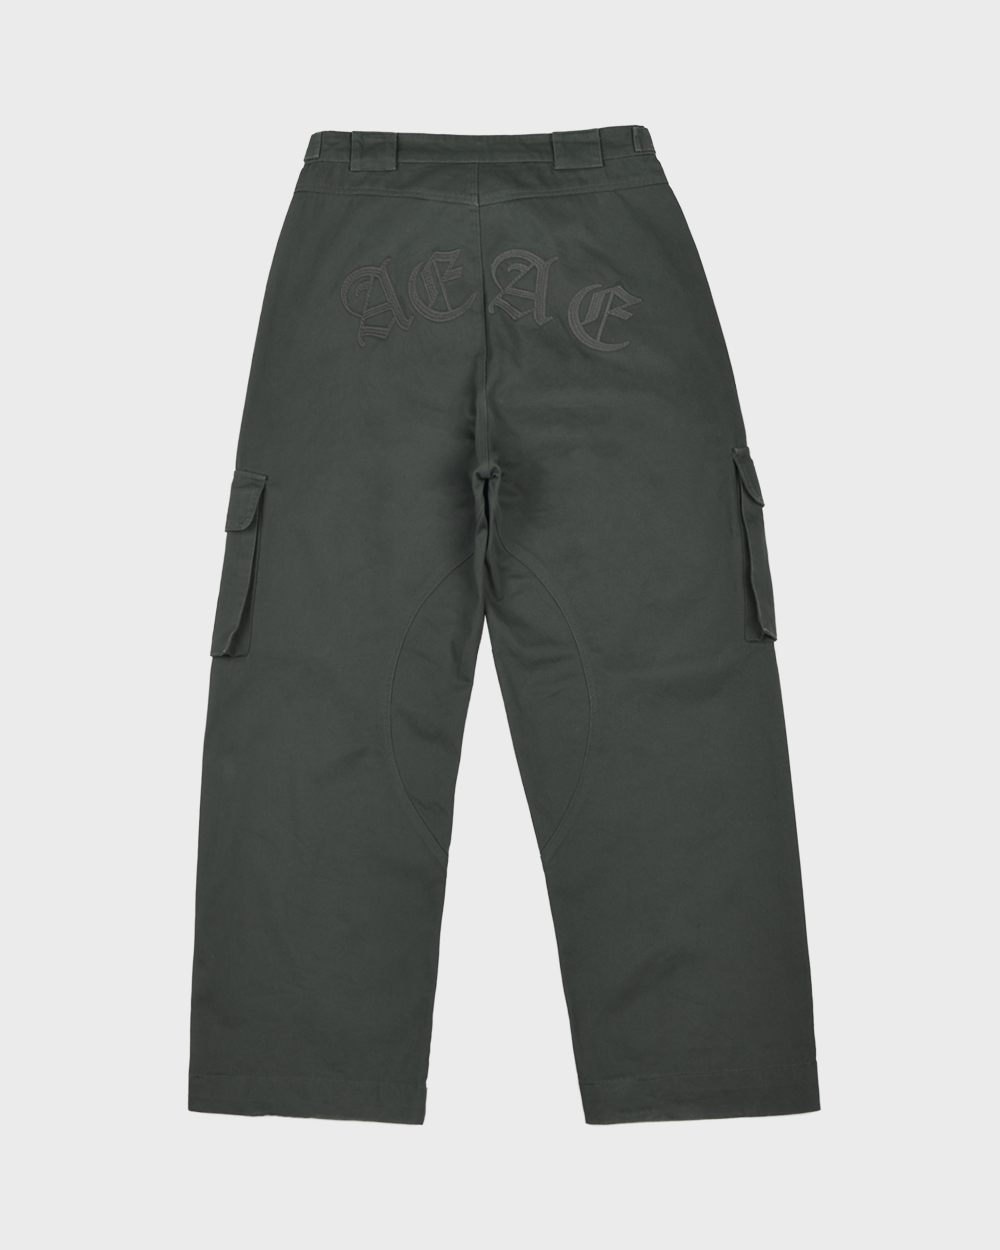 aeae 90’S Cargo Pants (Olive) _ 23일 예약 배송